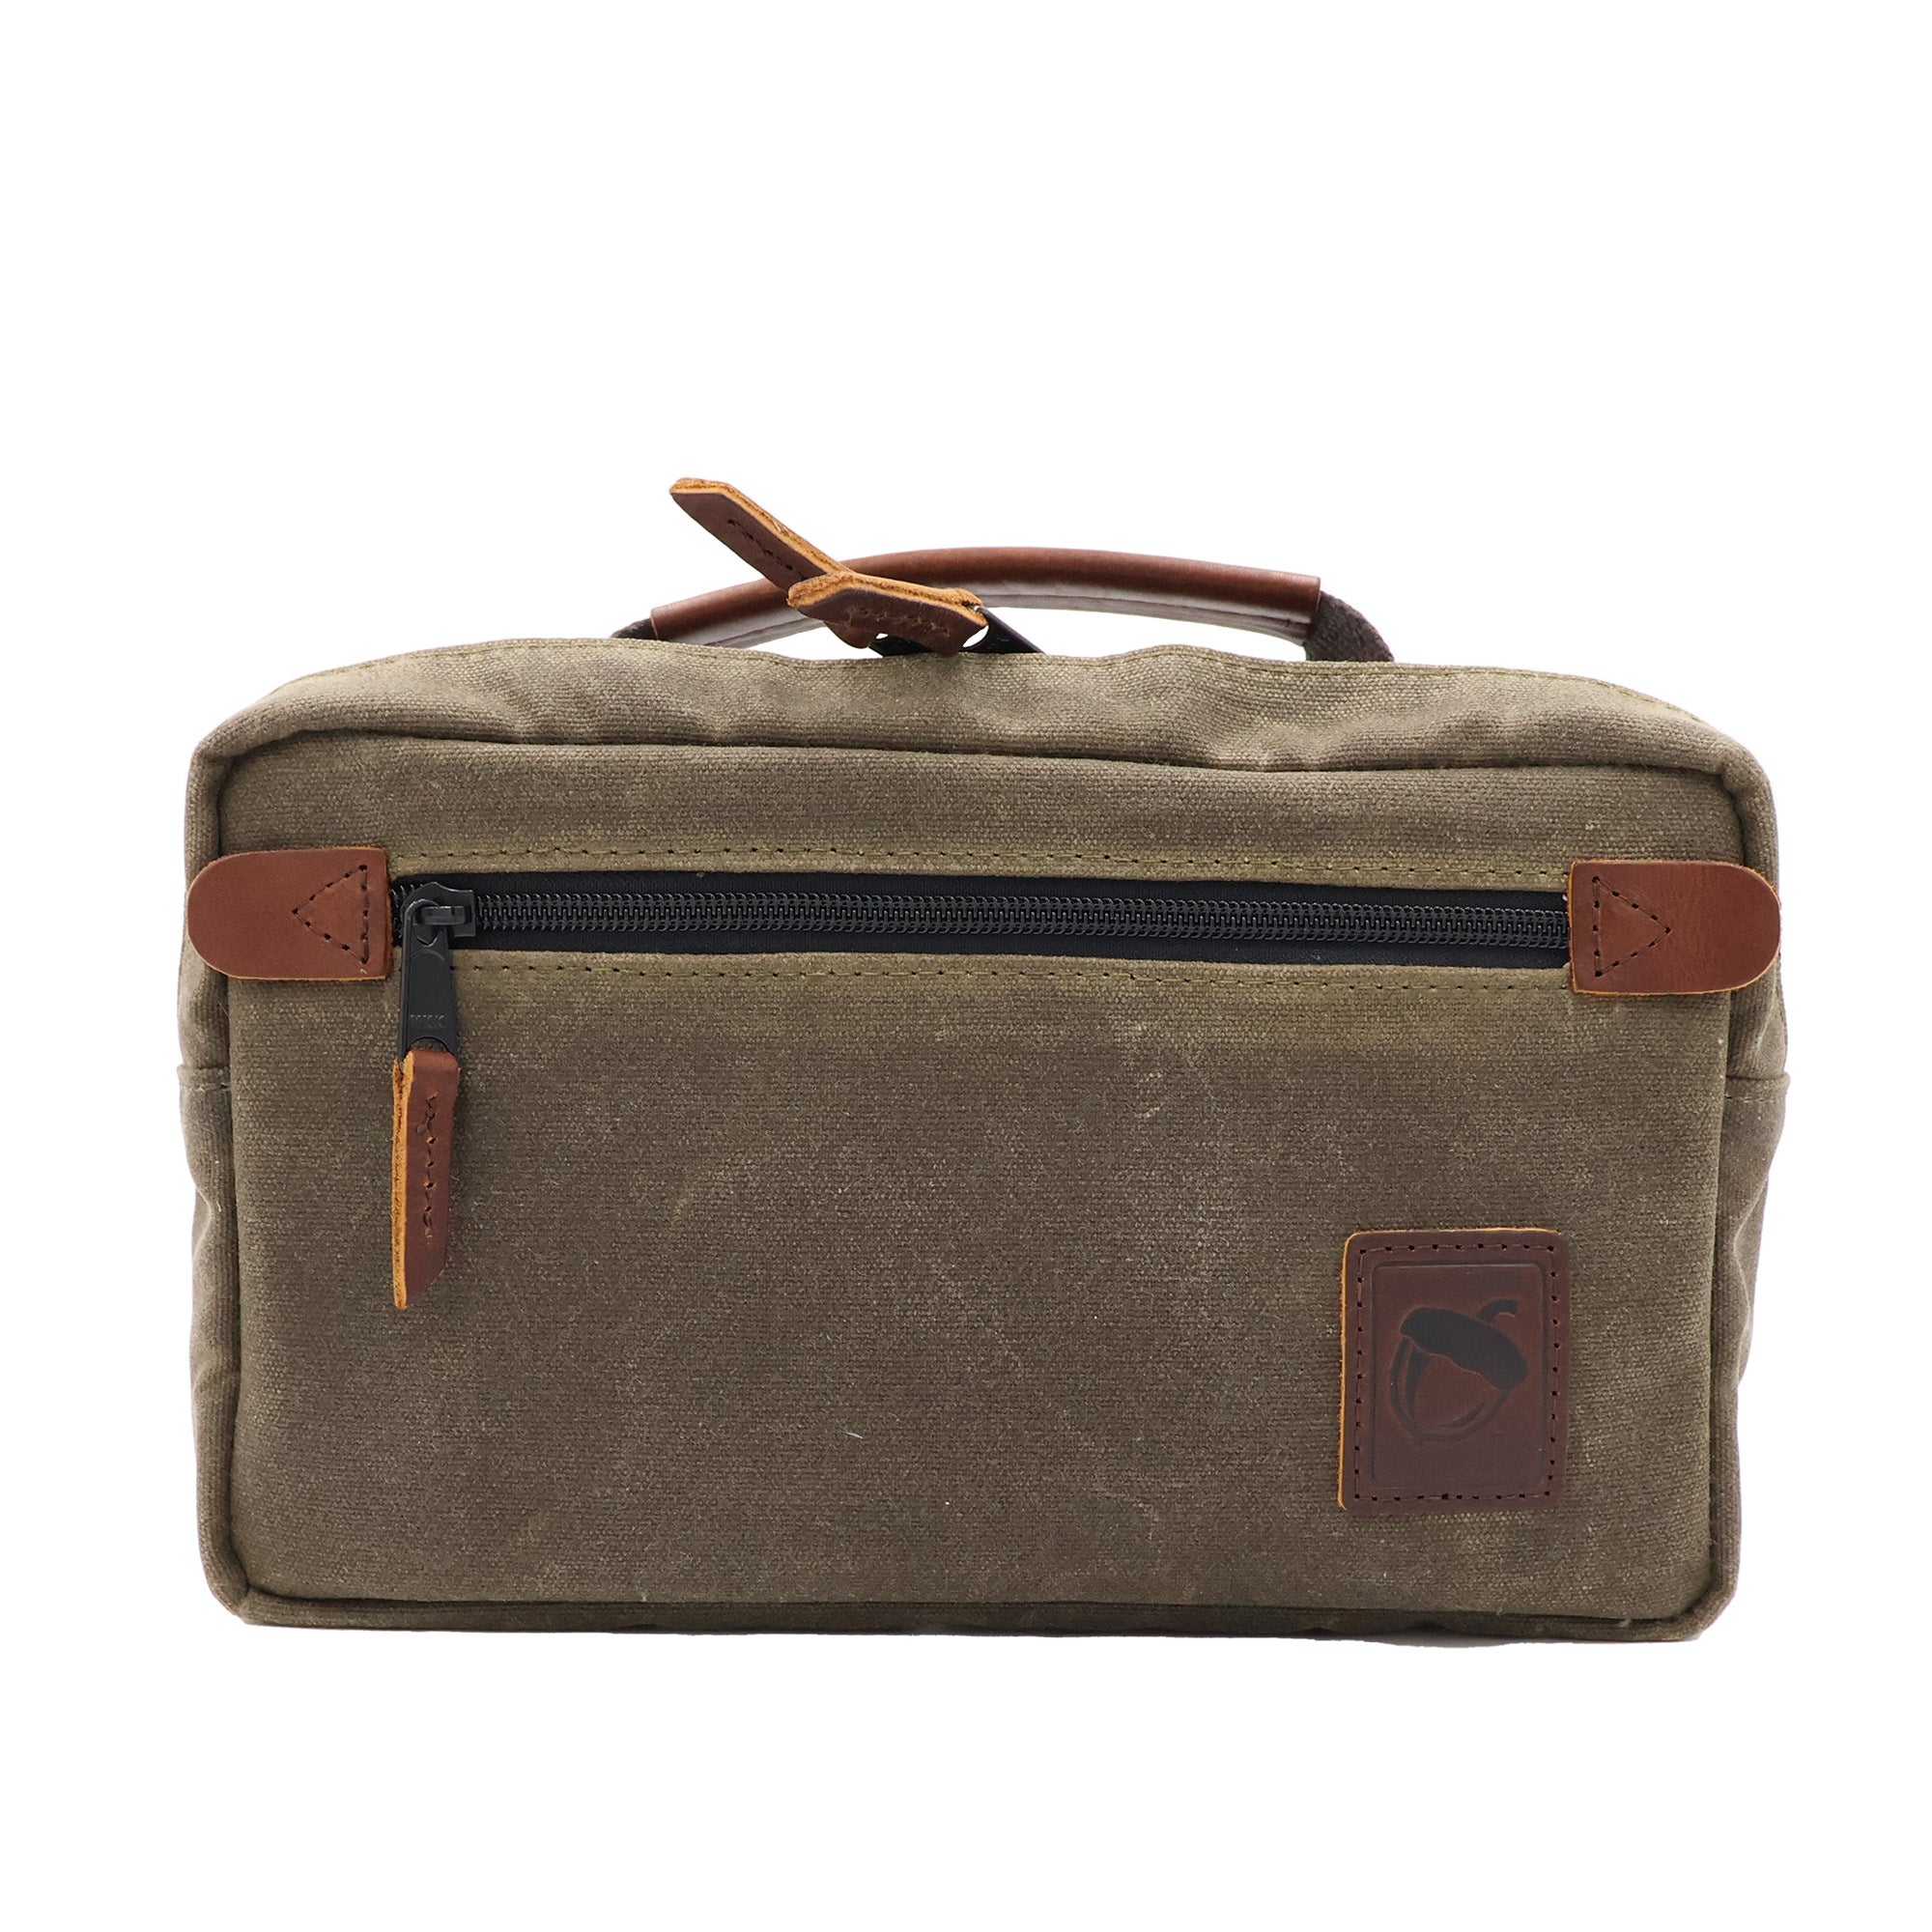  Murse - Messenger Bags / Luggage & Travel Gear